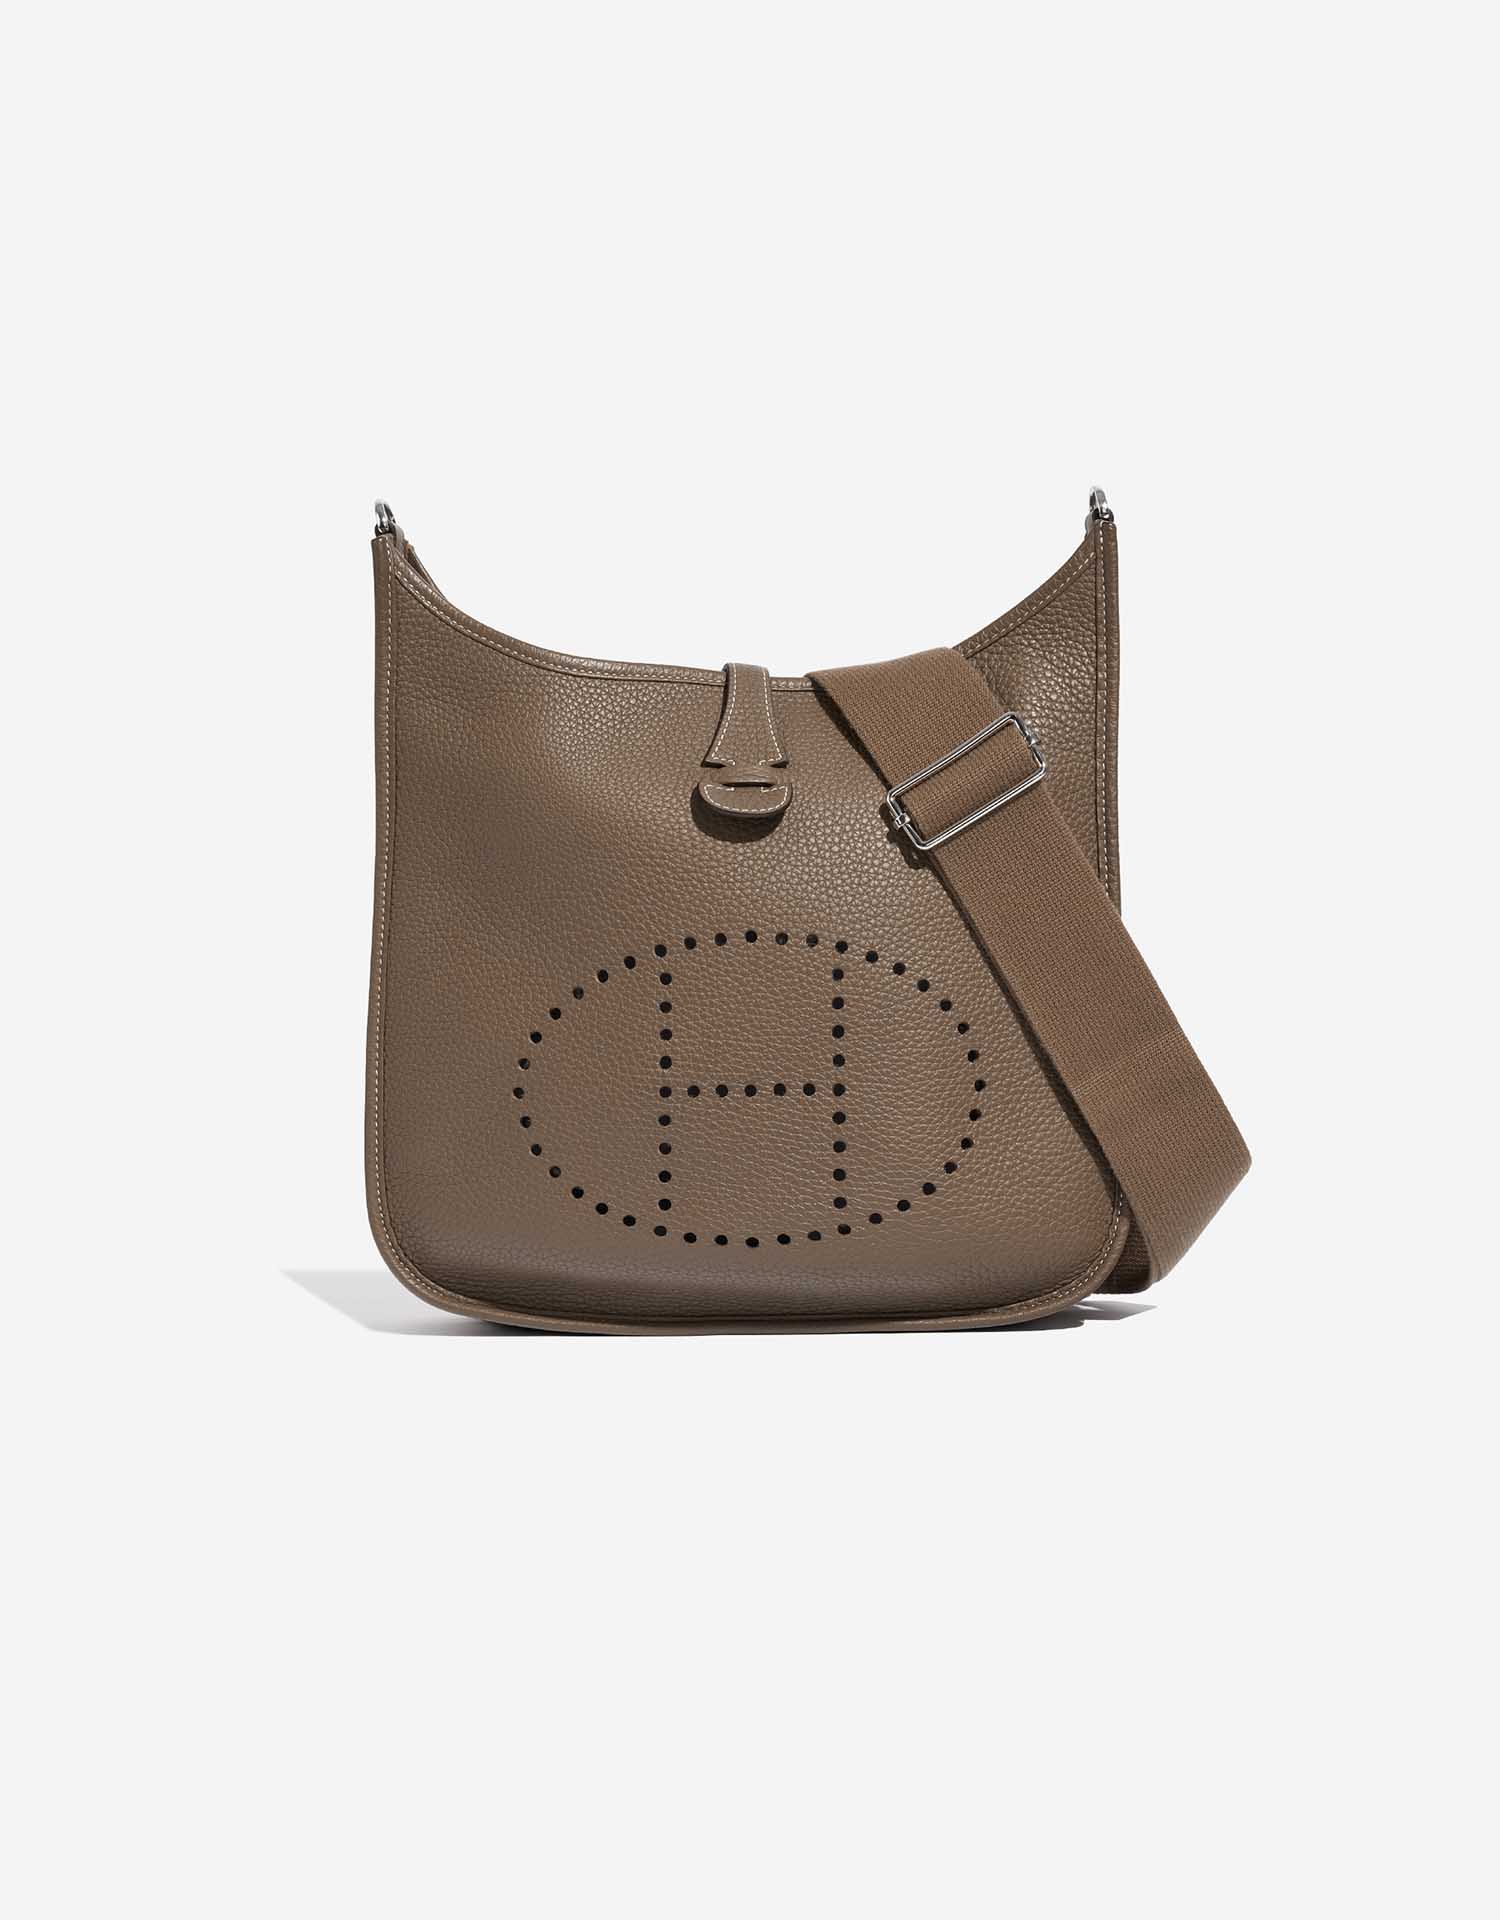 Hermès Mini Evelyne Shoulder Bag in Etoupe Leather Taurillon